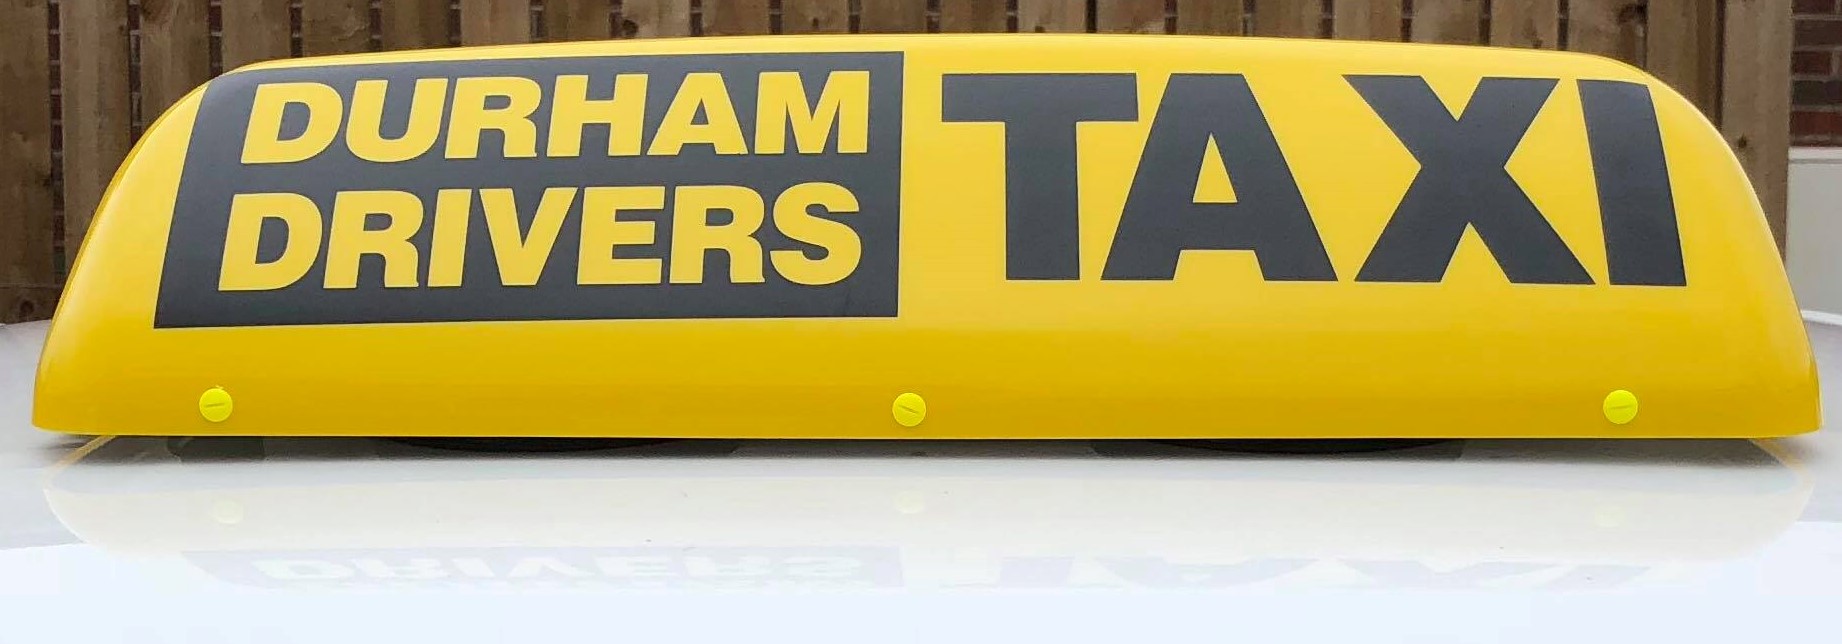 Durham Drivers Taxi